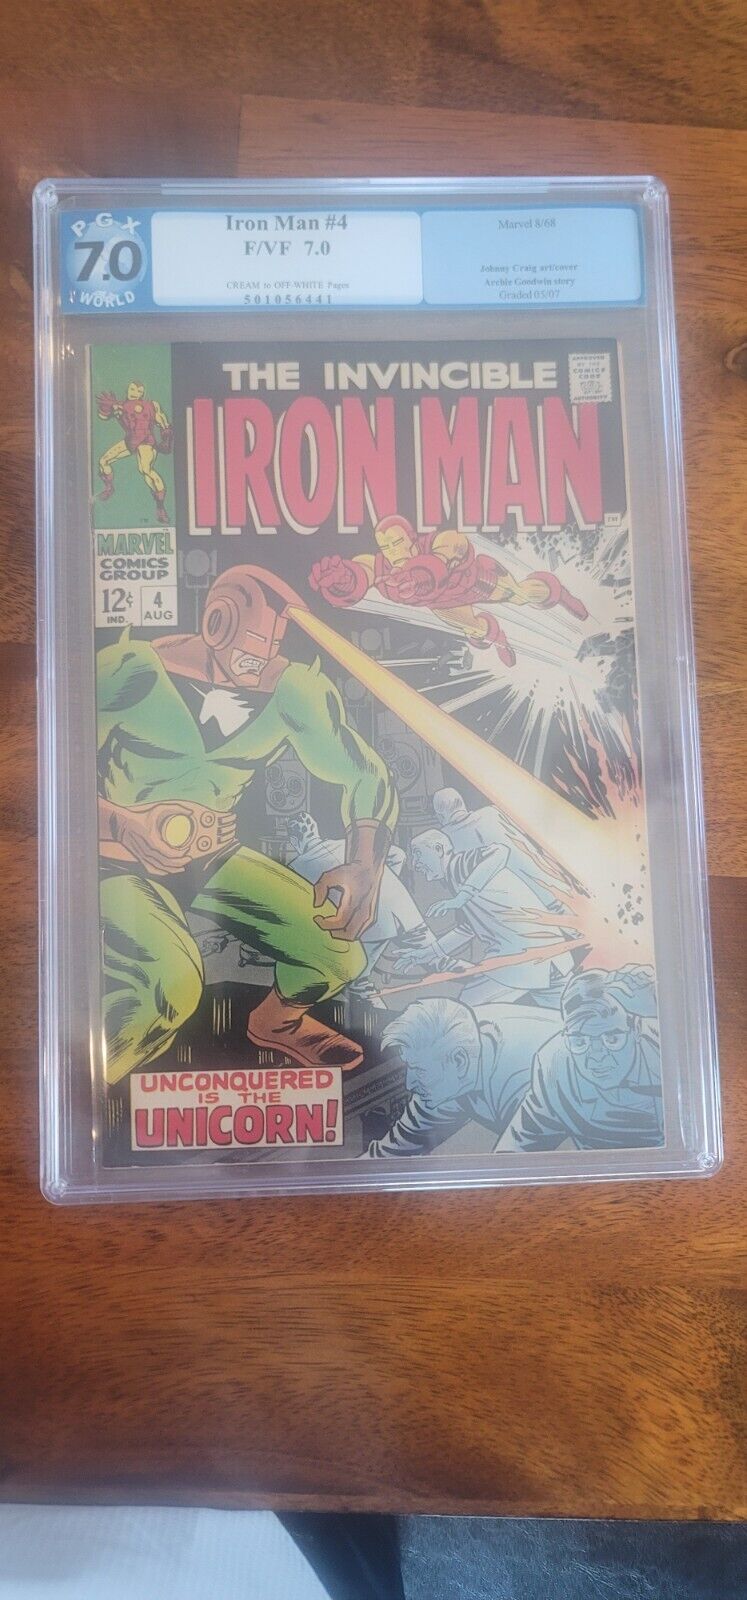 Iron Man #4, Vol 1, 7.0 Graded PGX